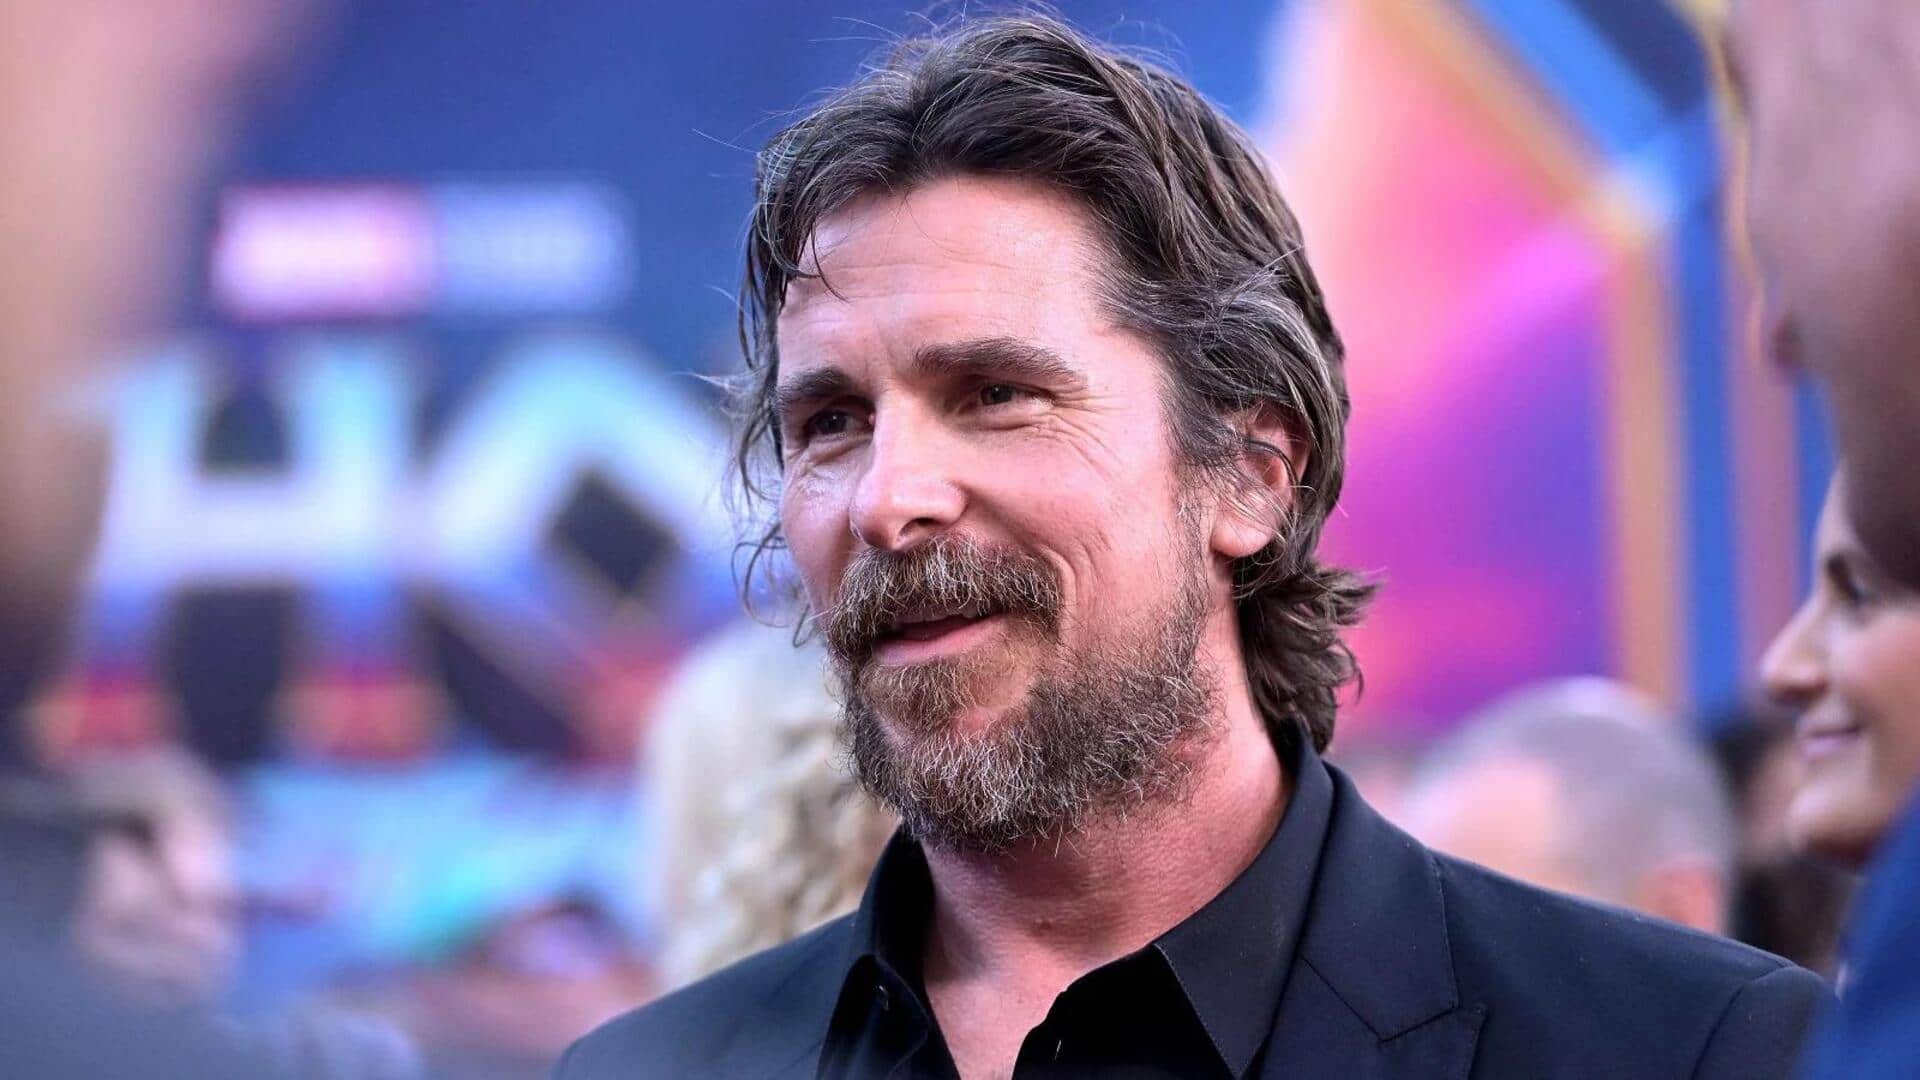 Christian Bale's best roles, beyond Batman